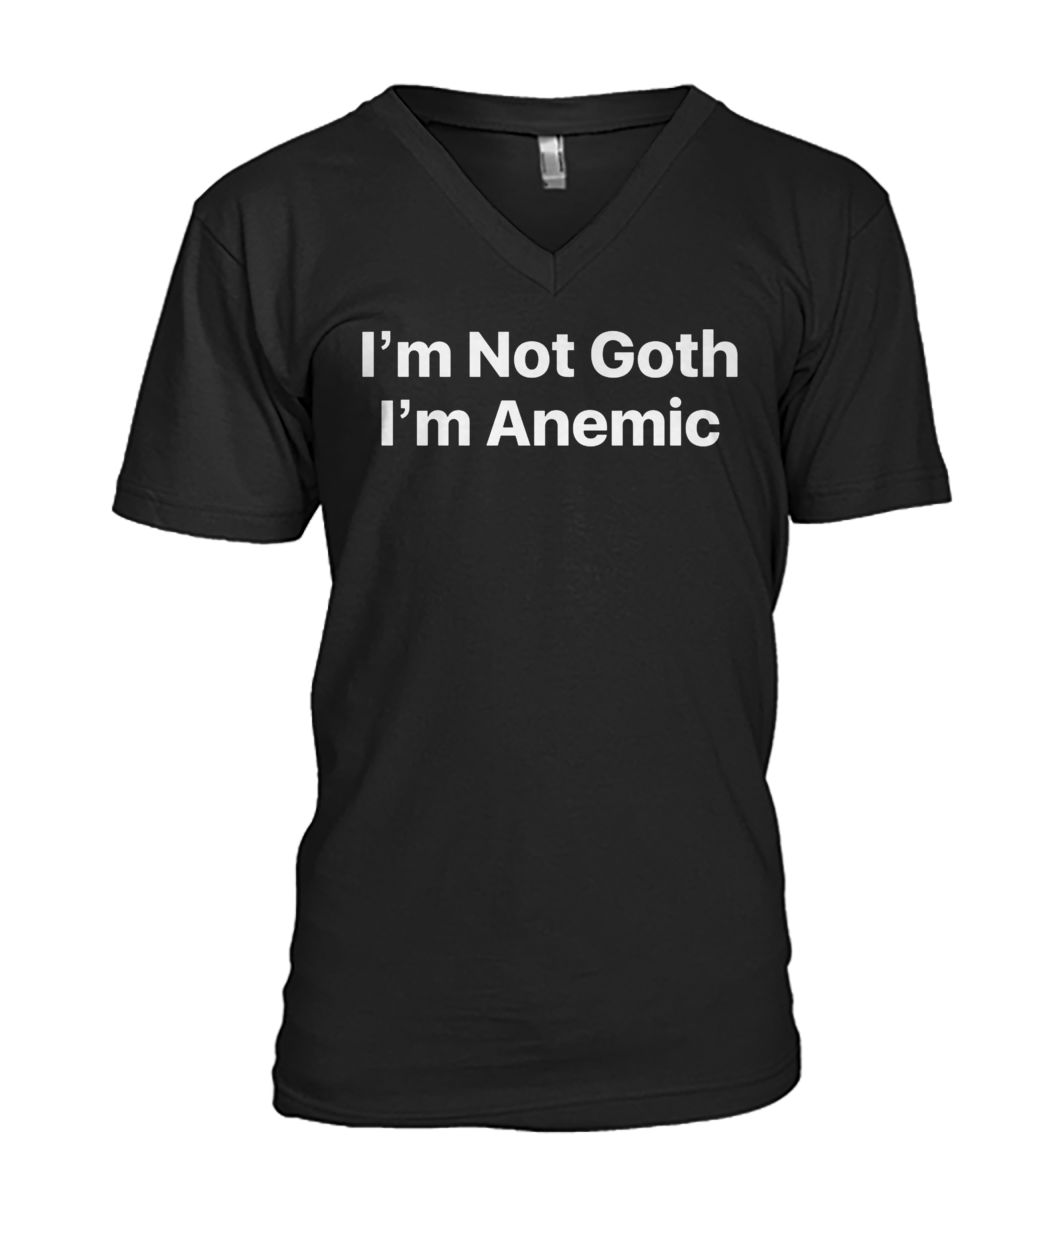 I'm not goth I'm anemic mens v-neck